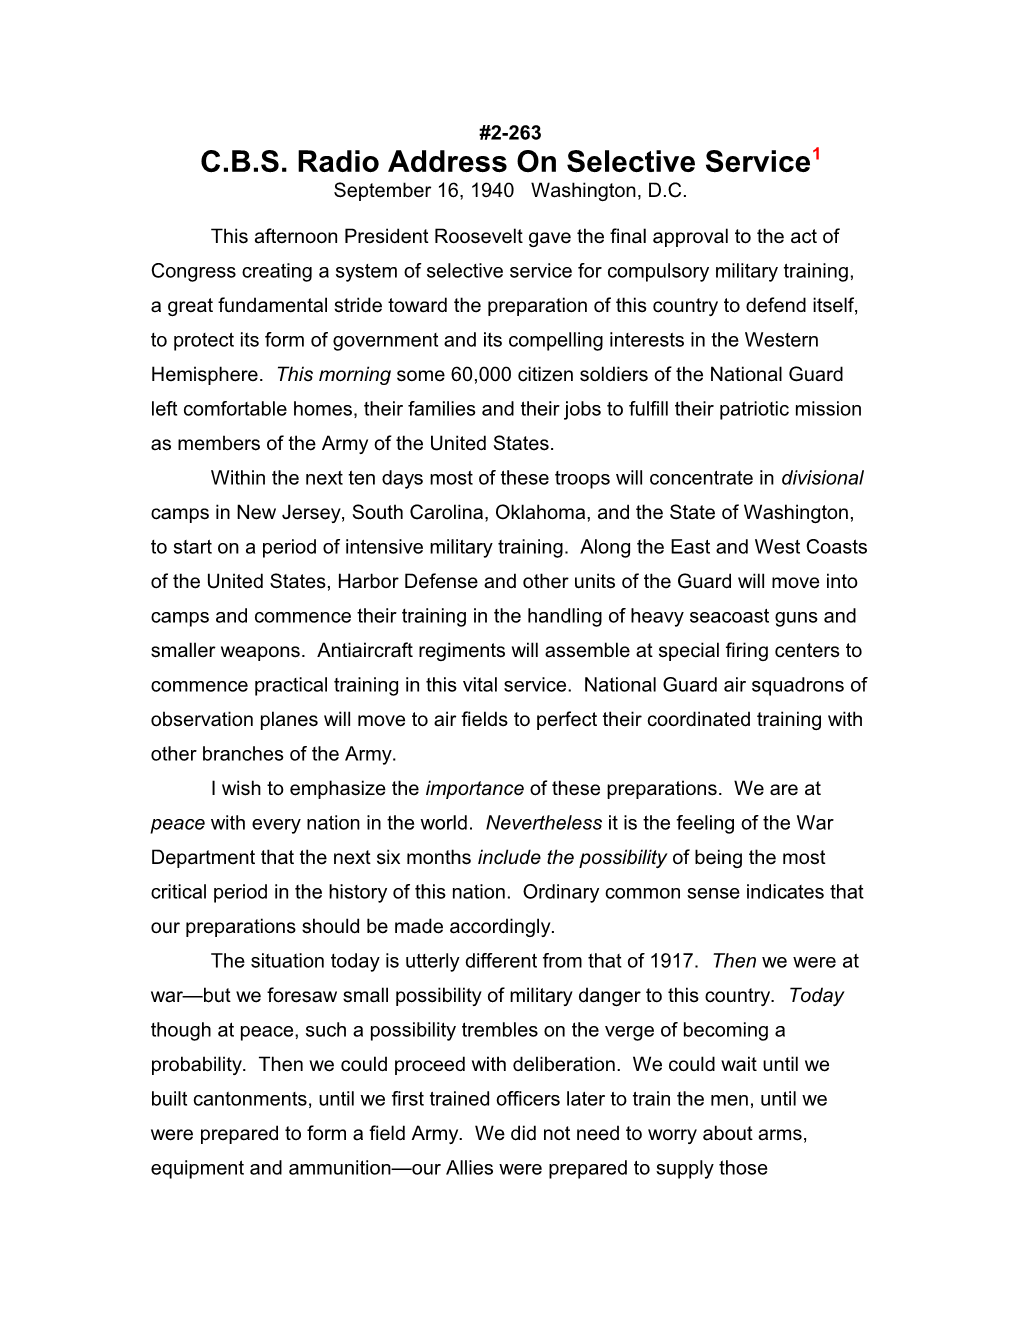 C.B.S. Radio Address on Selective Service1